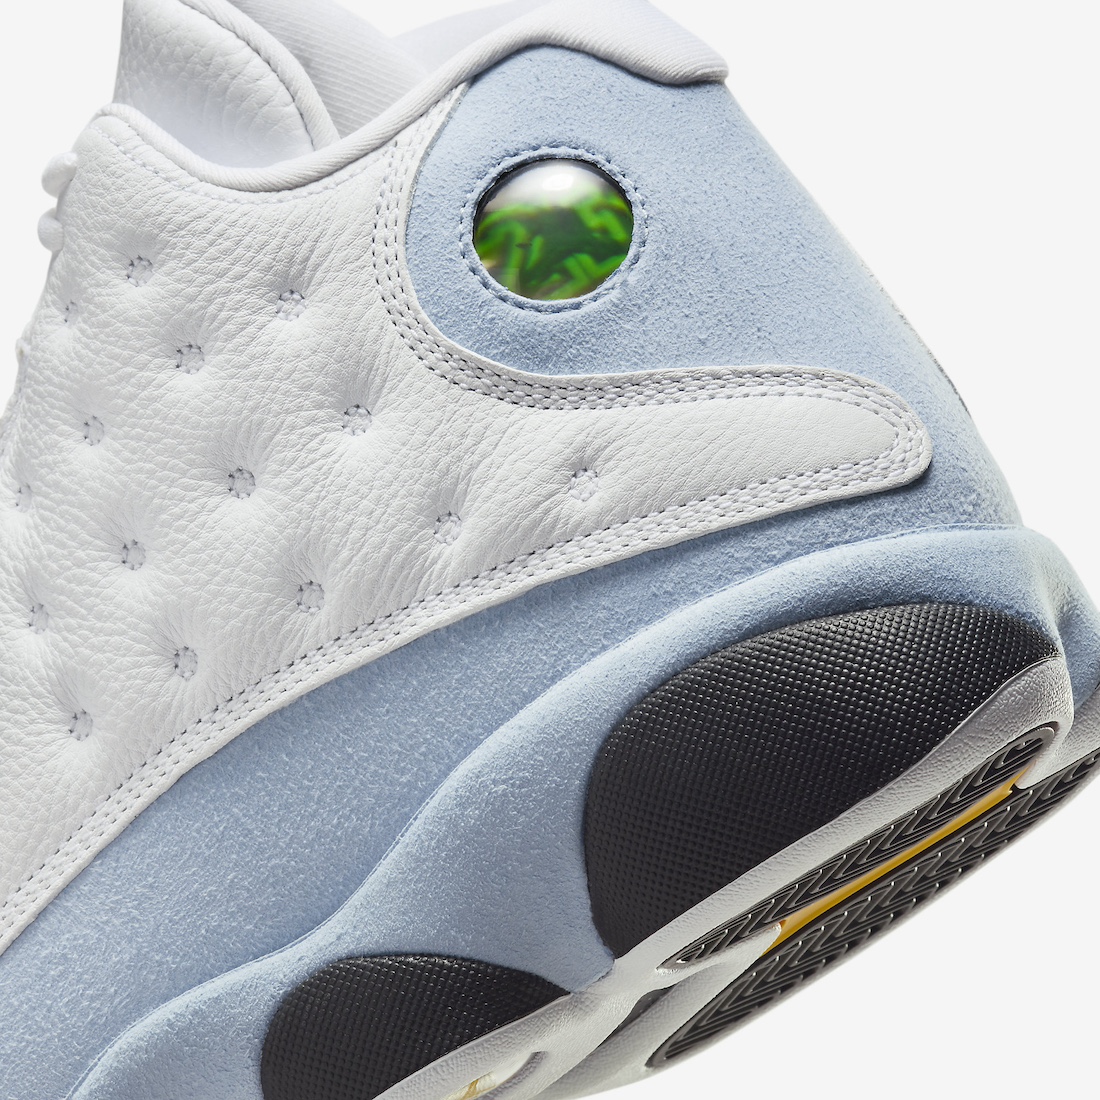 Official Look At The Air Jordan 13 Retro “Blue Grey”